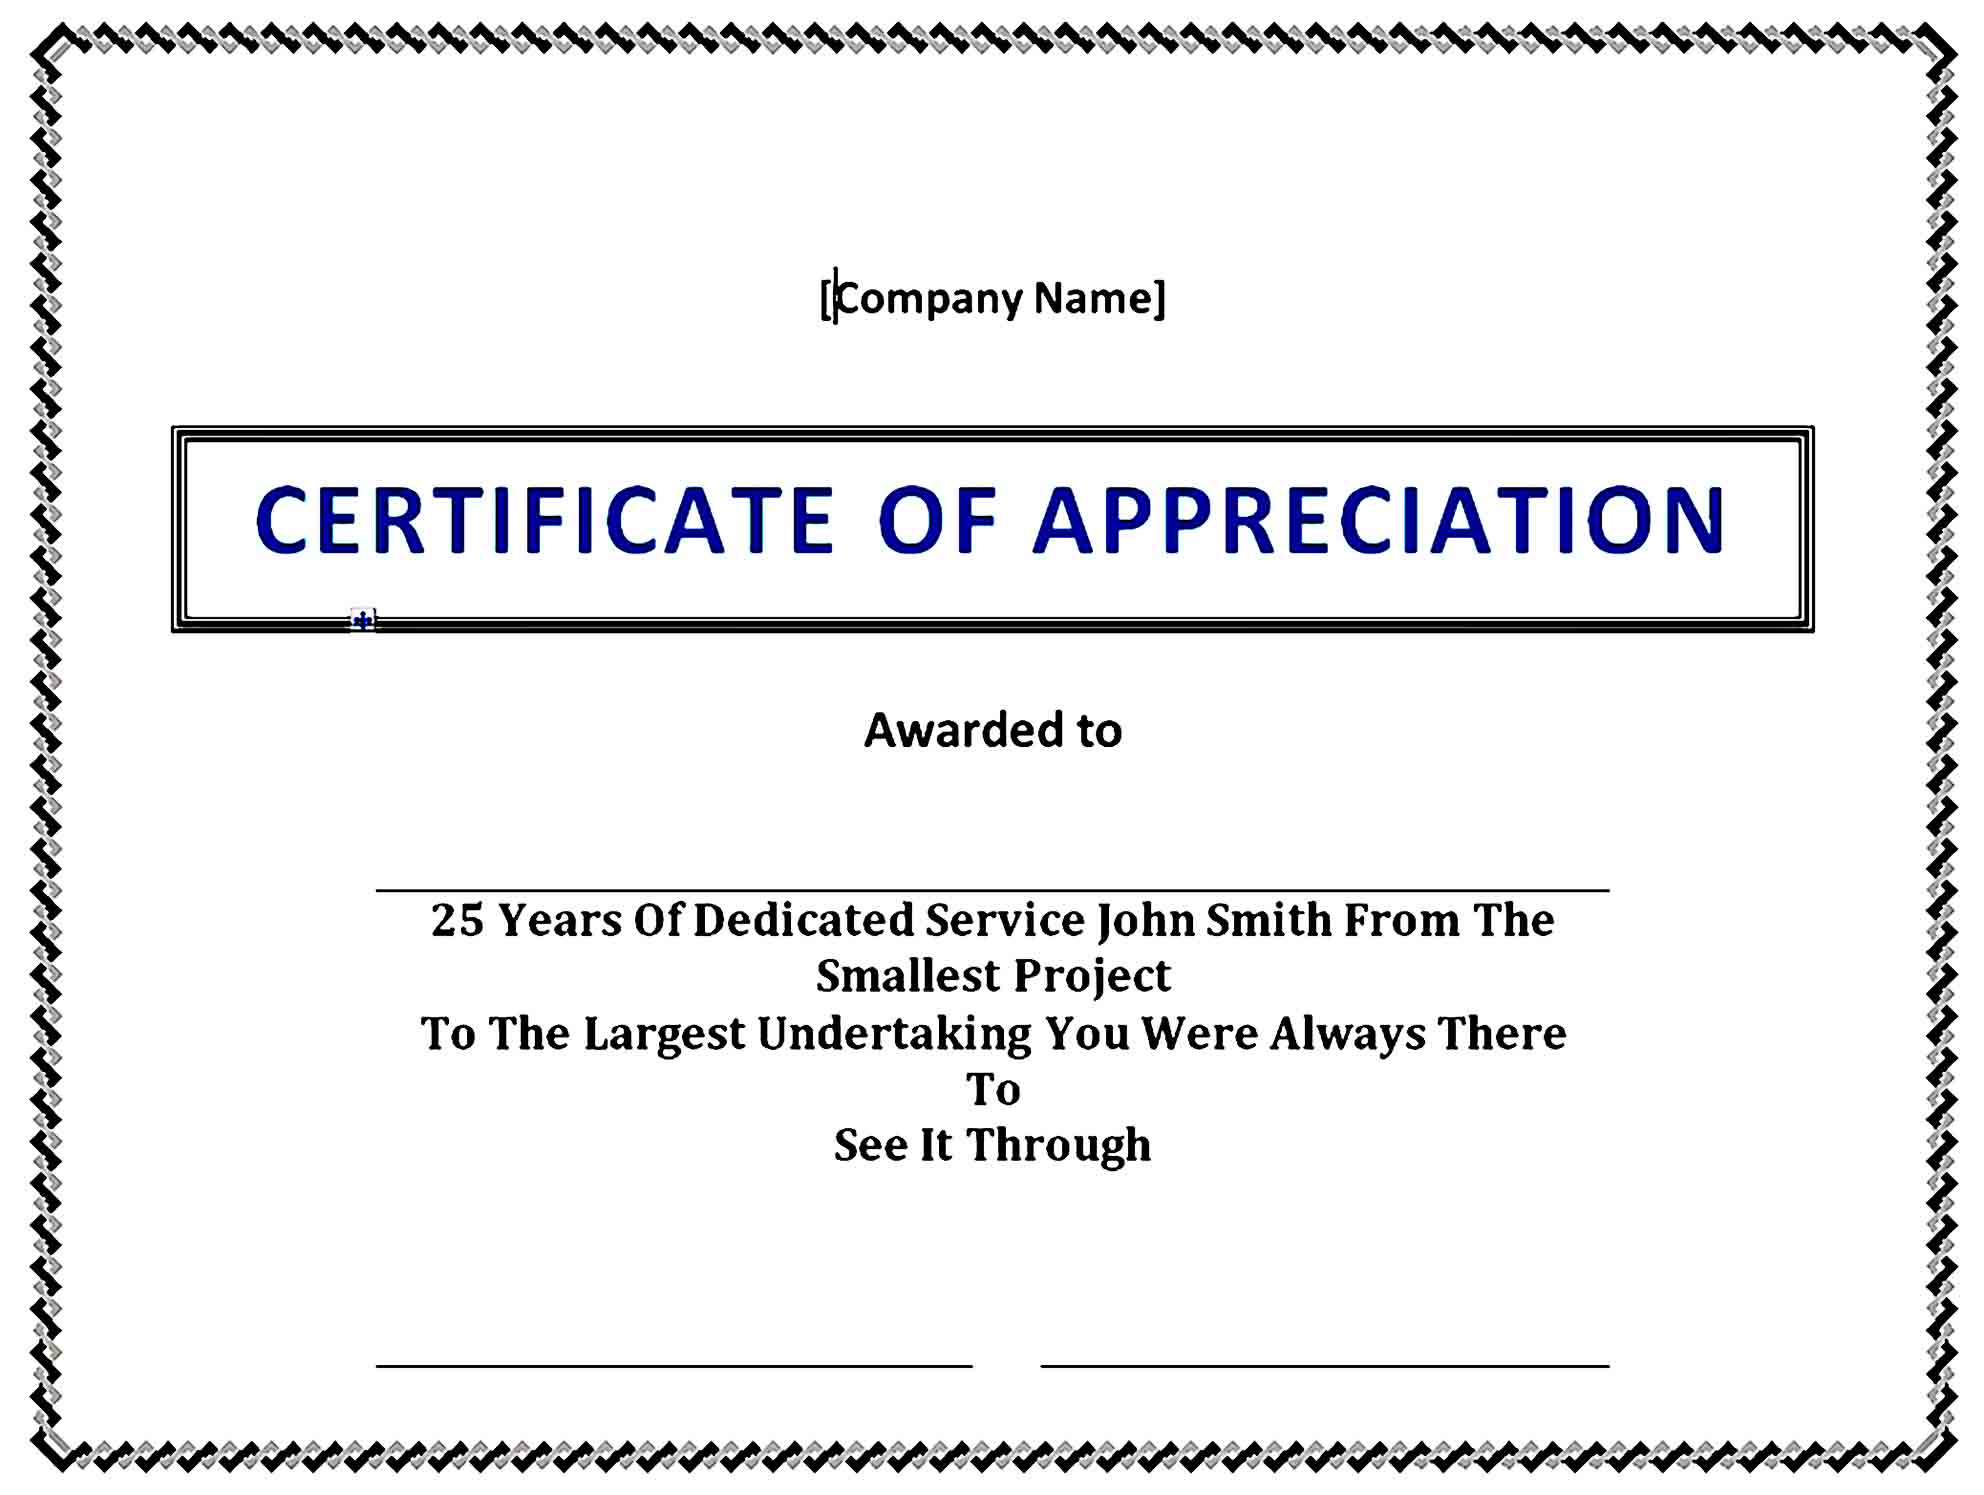 Certificate of Appreciation 05